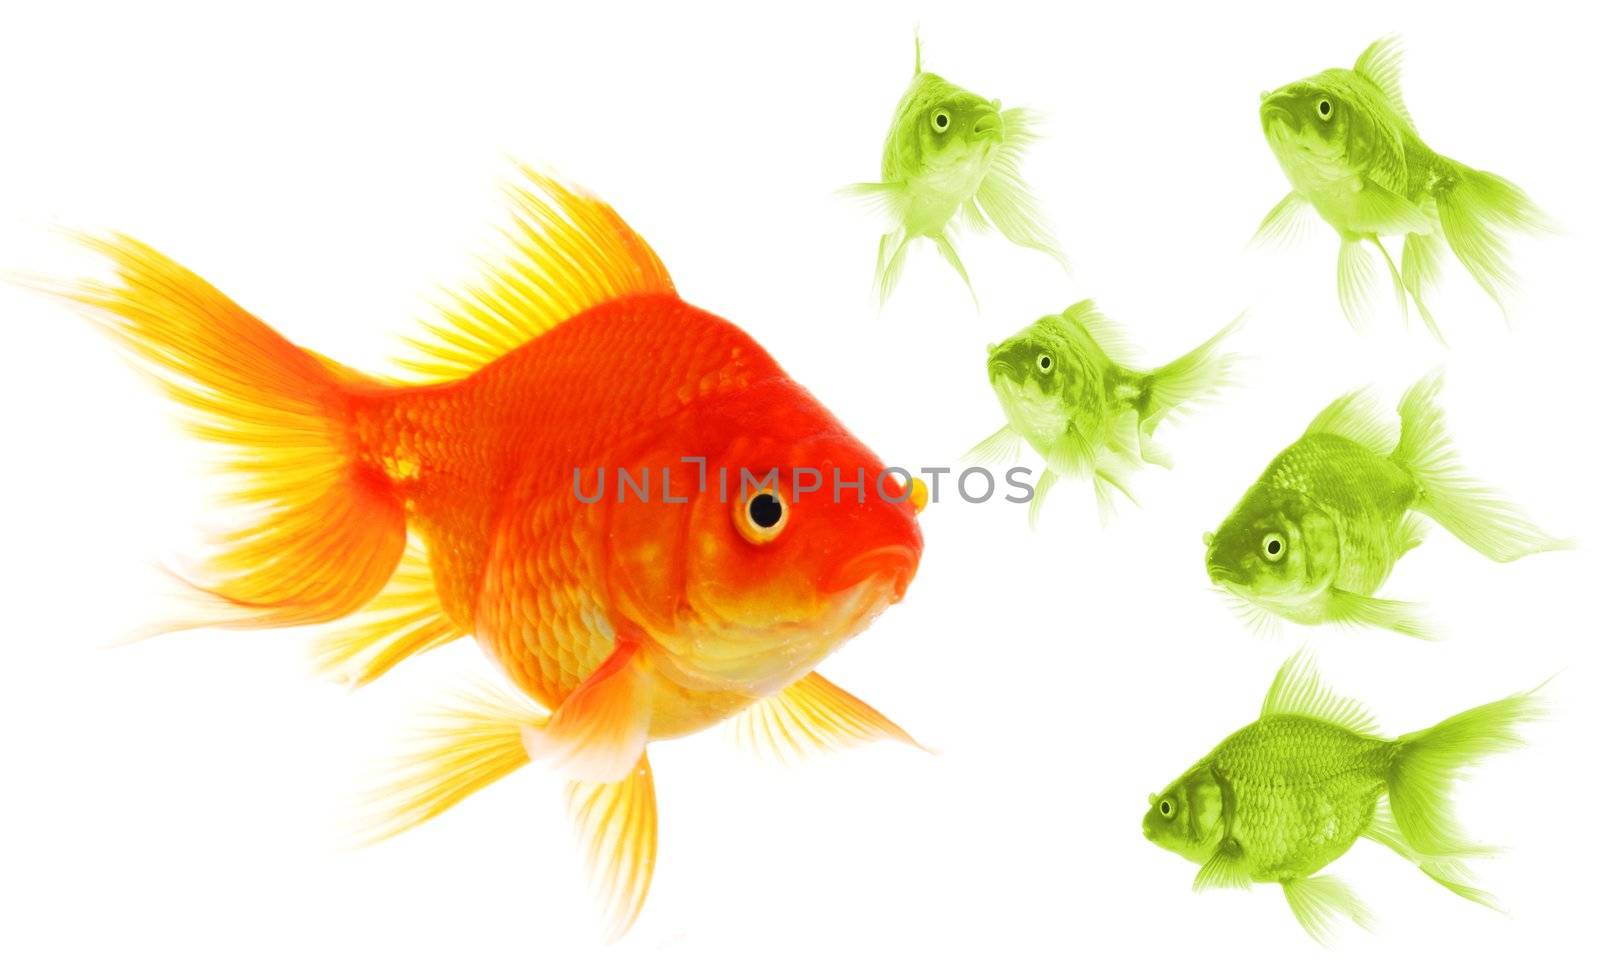 goldfish showing discrimination success individuality leadership or motivation concept